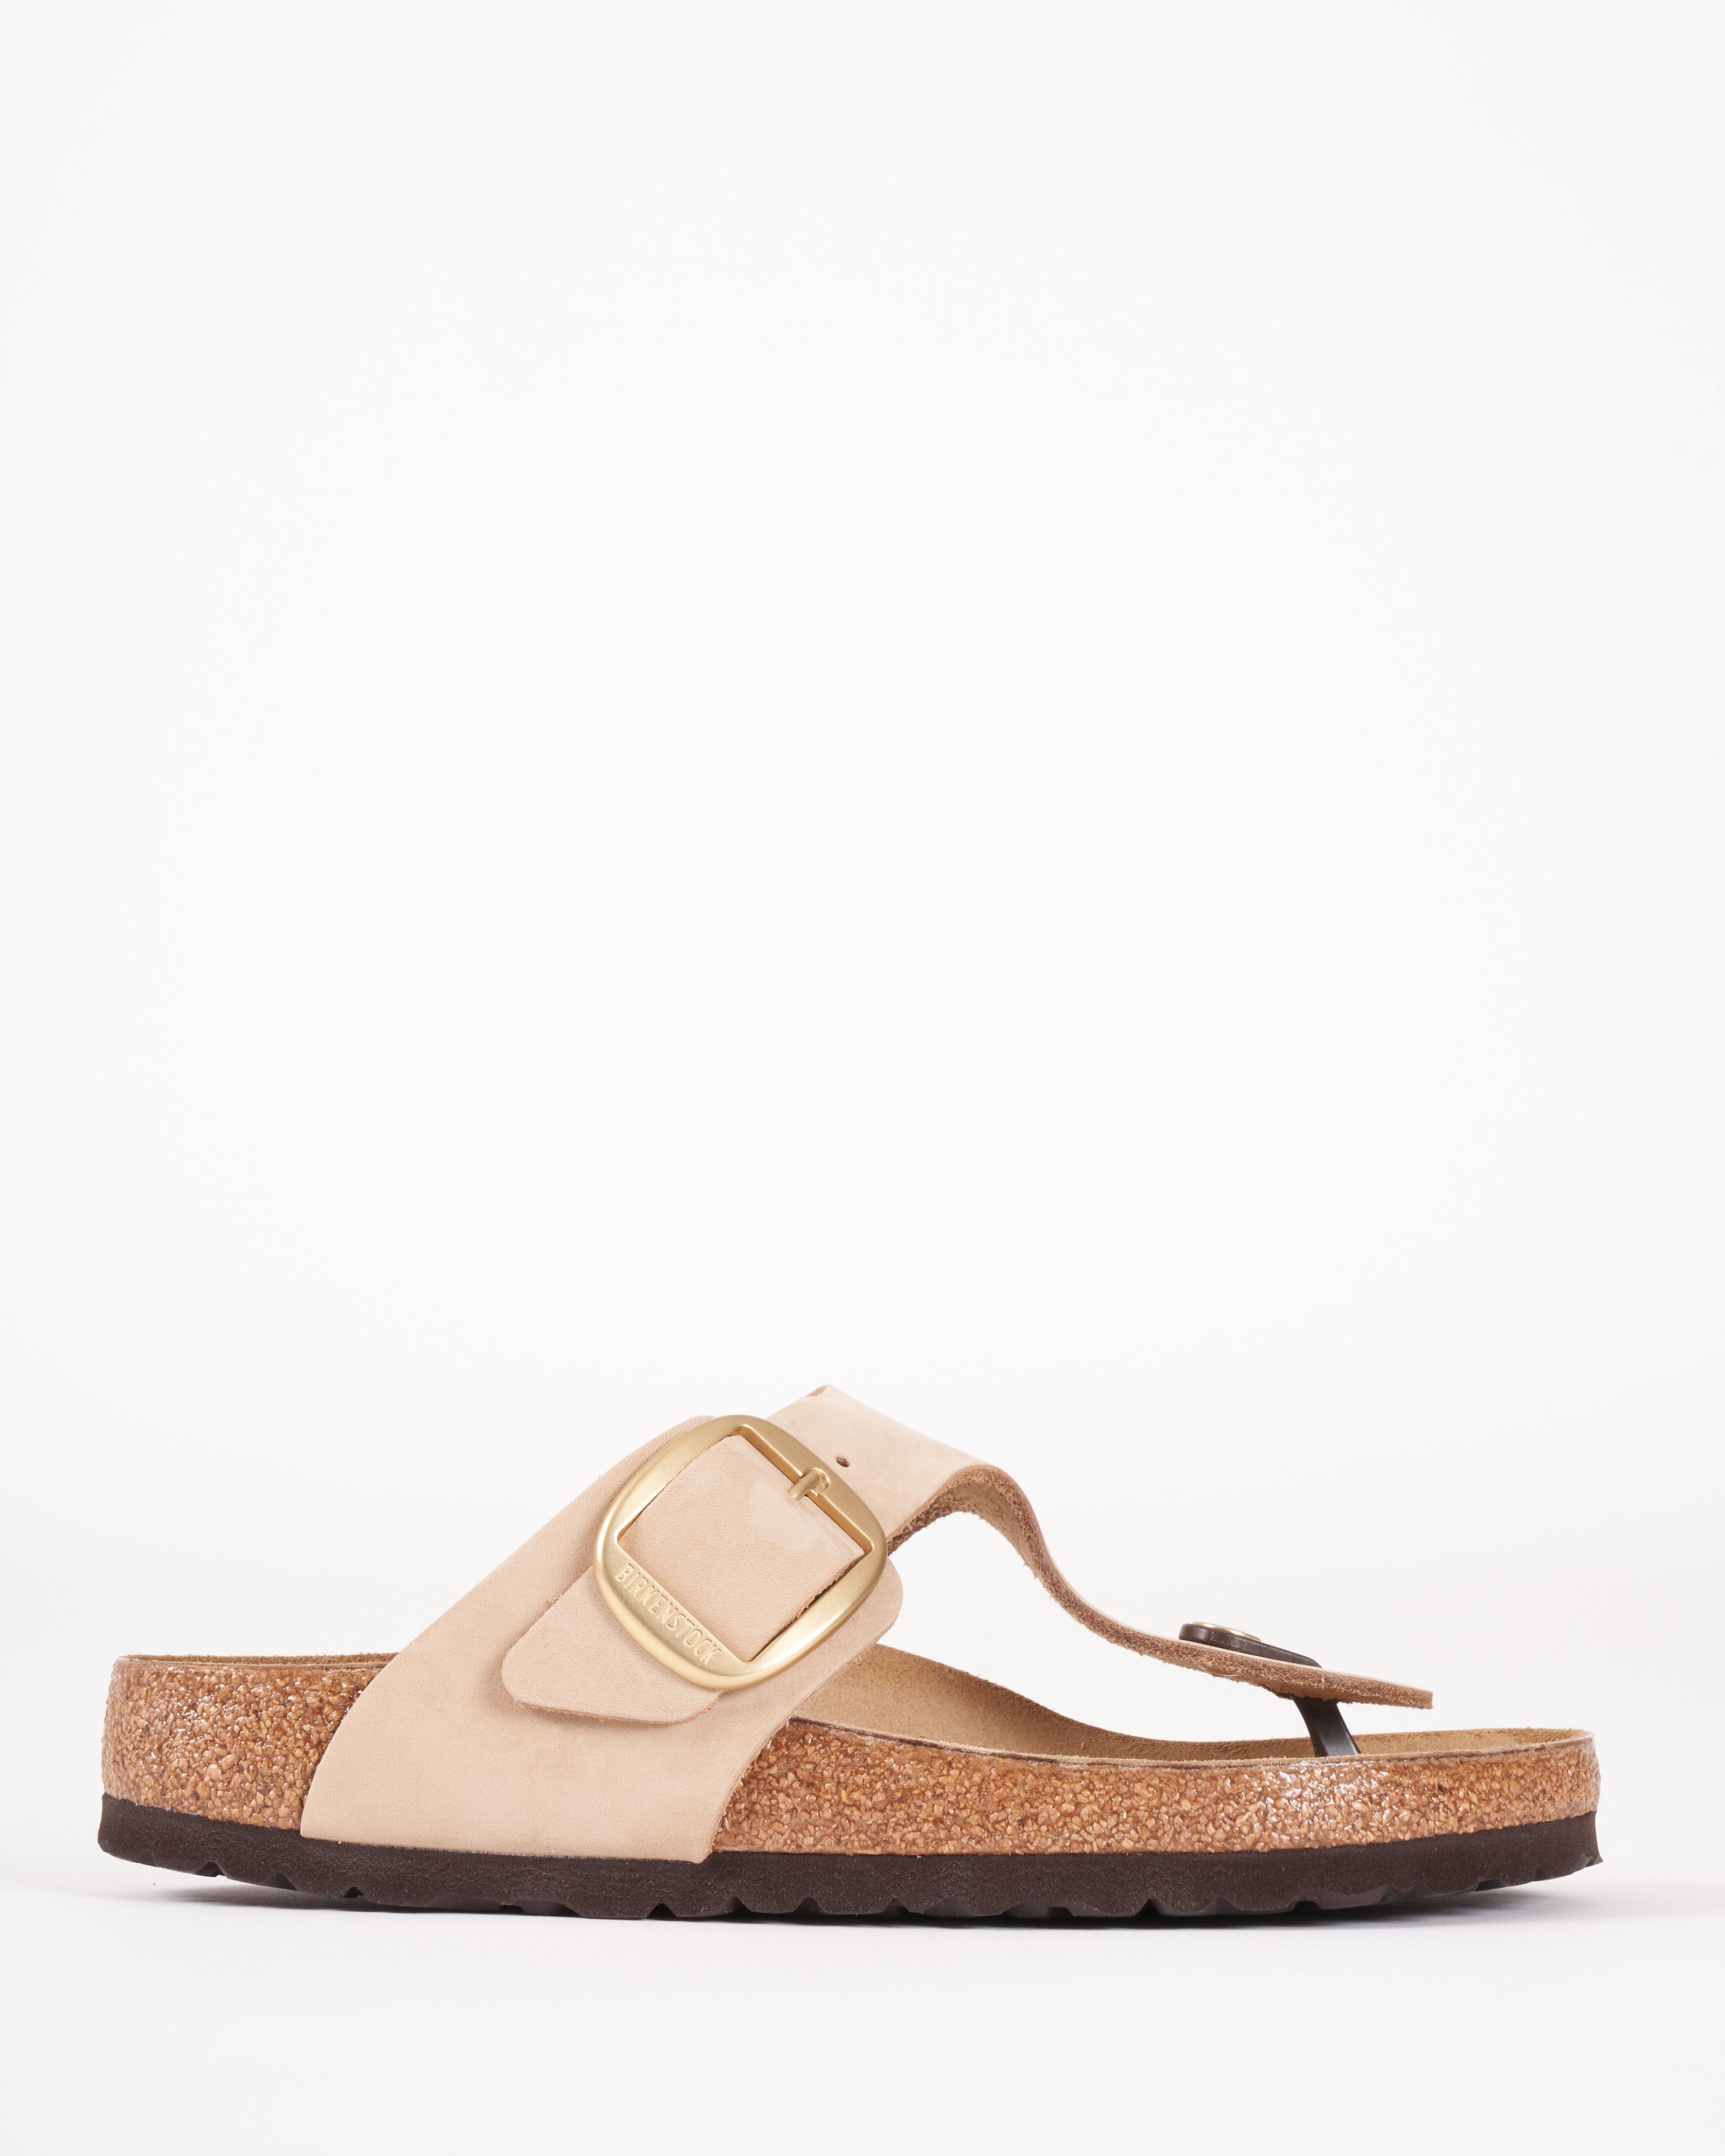 Birkenstock, sandalo gizeh con fibbia grande - nabuk color sabbia